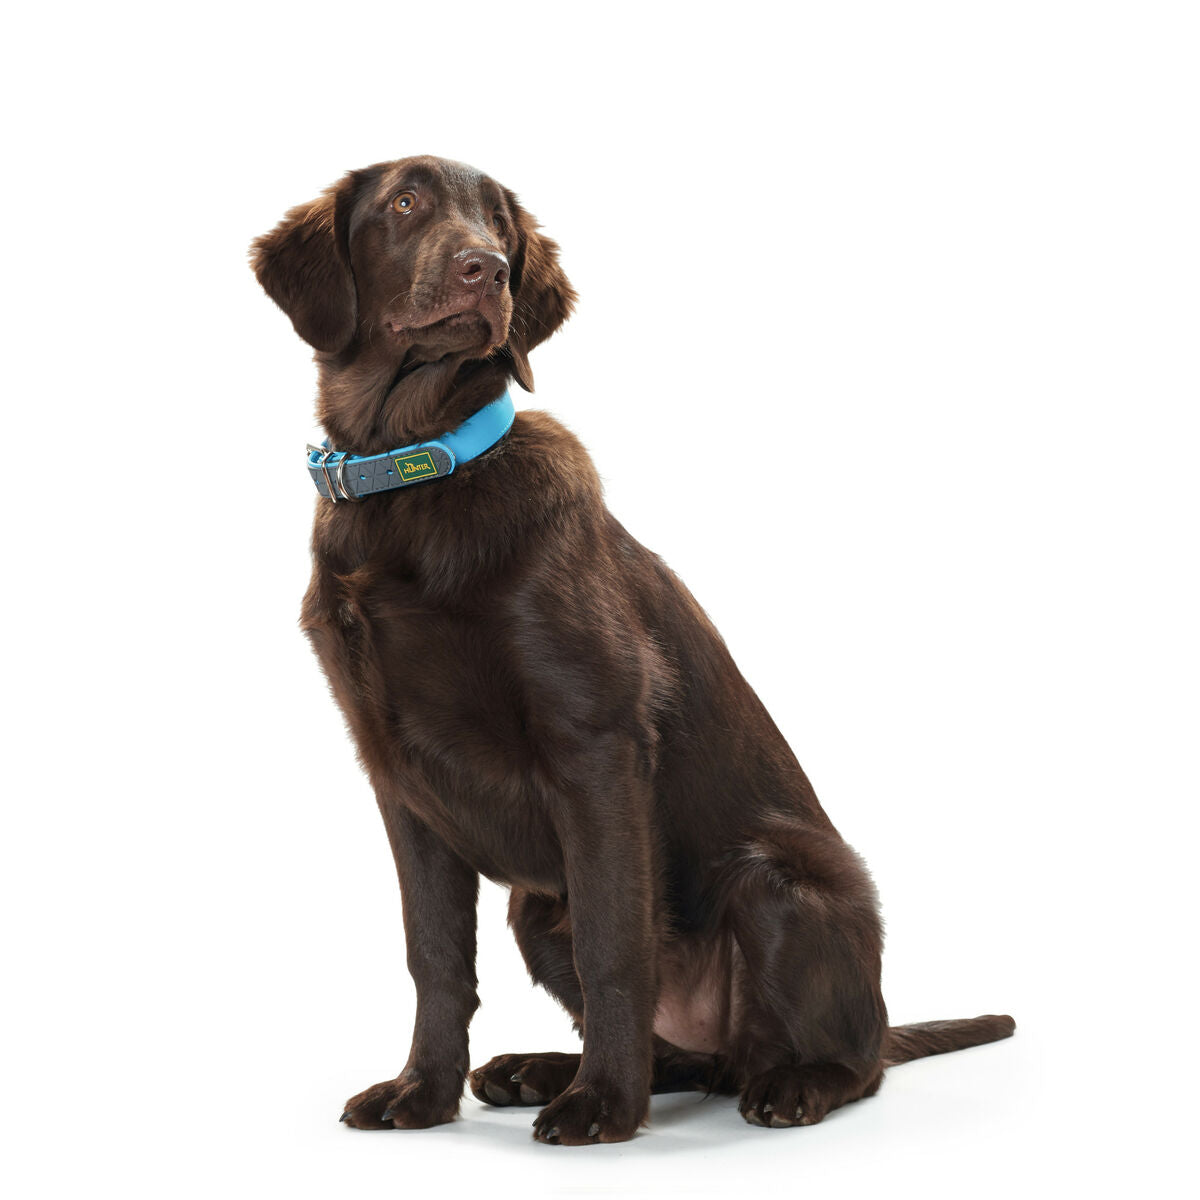 Dog collar Hunter Convenience 53-61 cm L/XL Turquoise